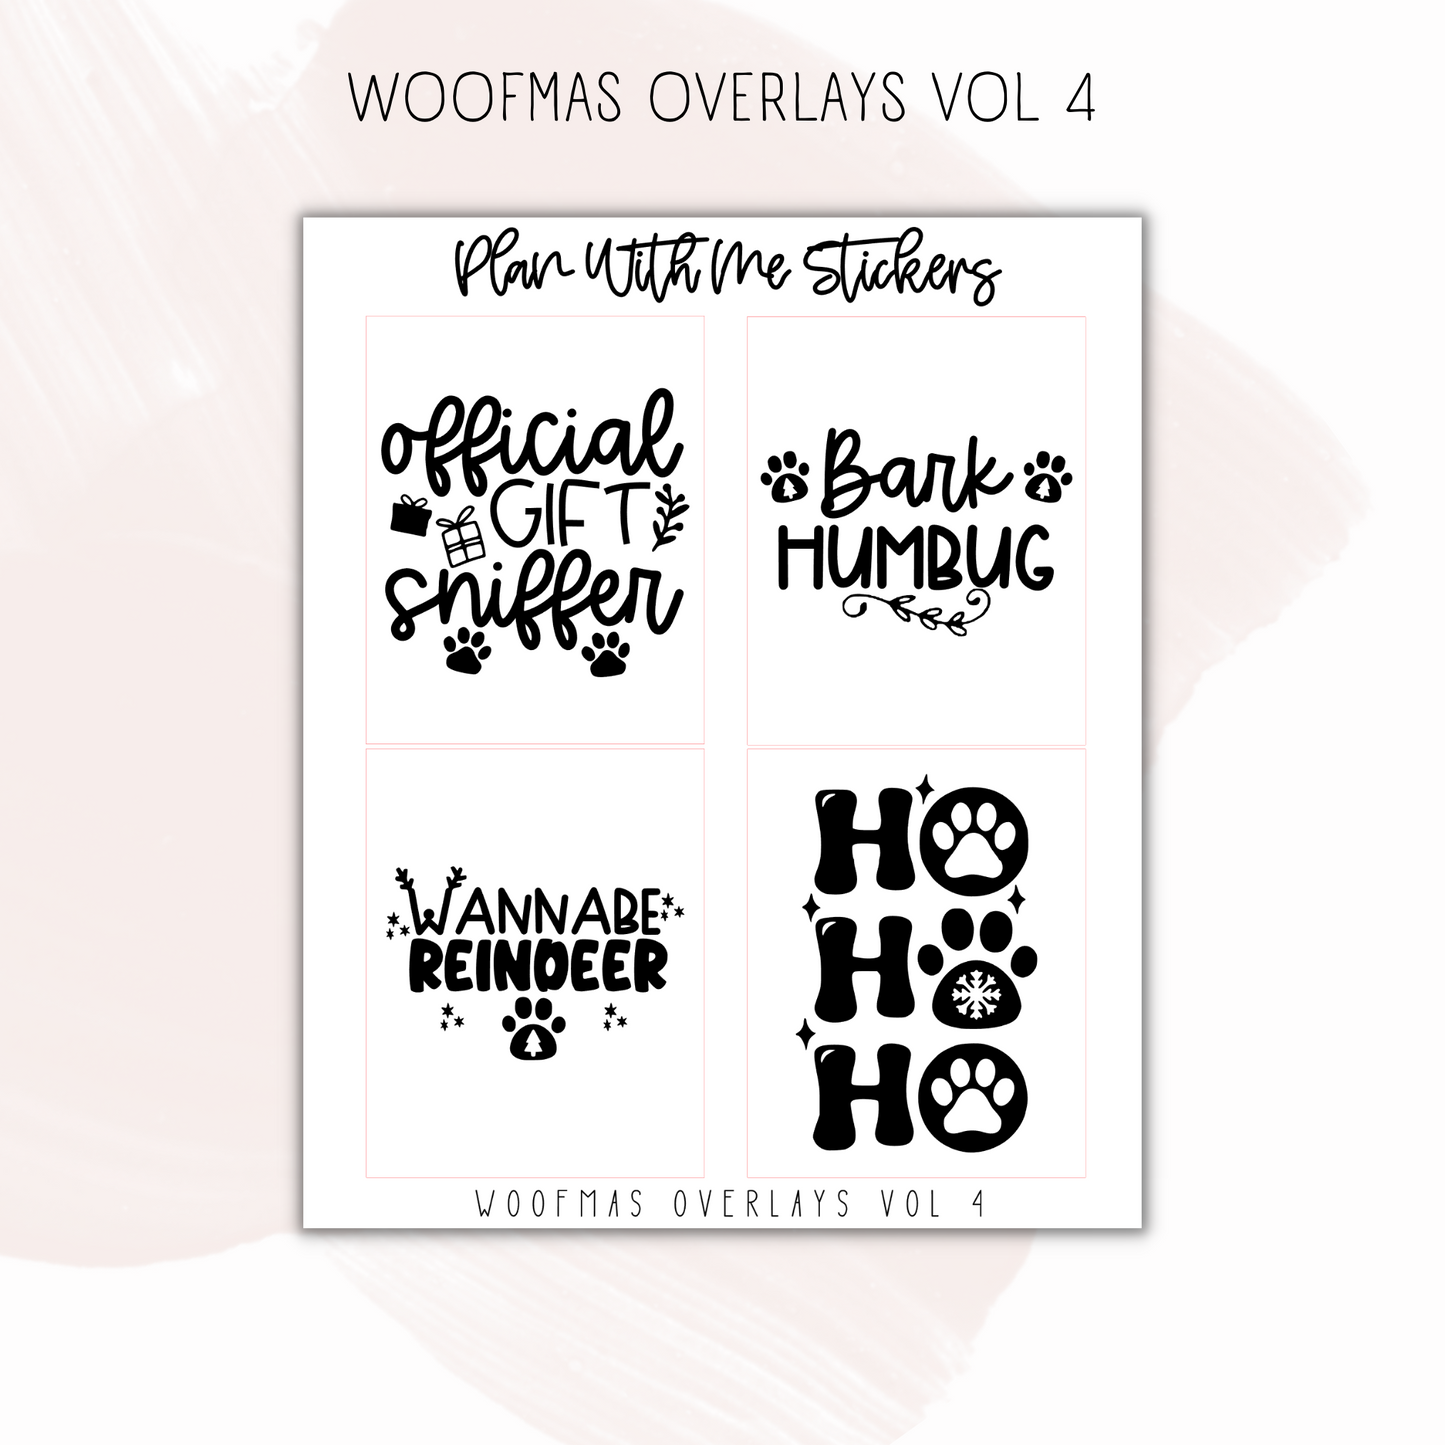 Woofmas Overlays Vol 4